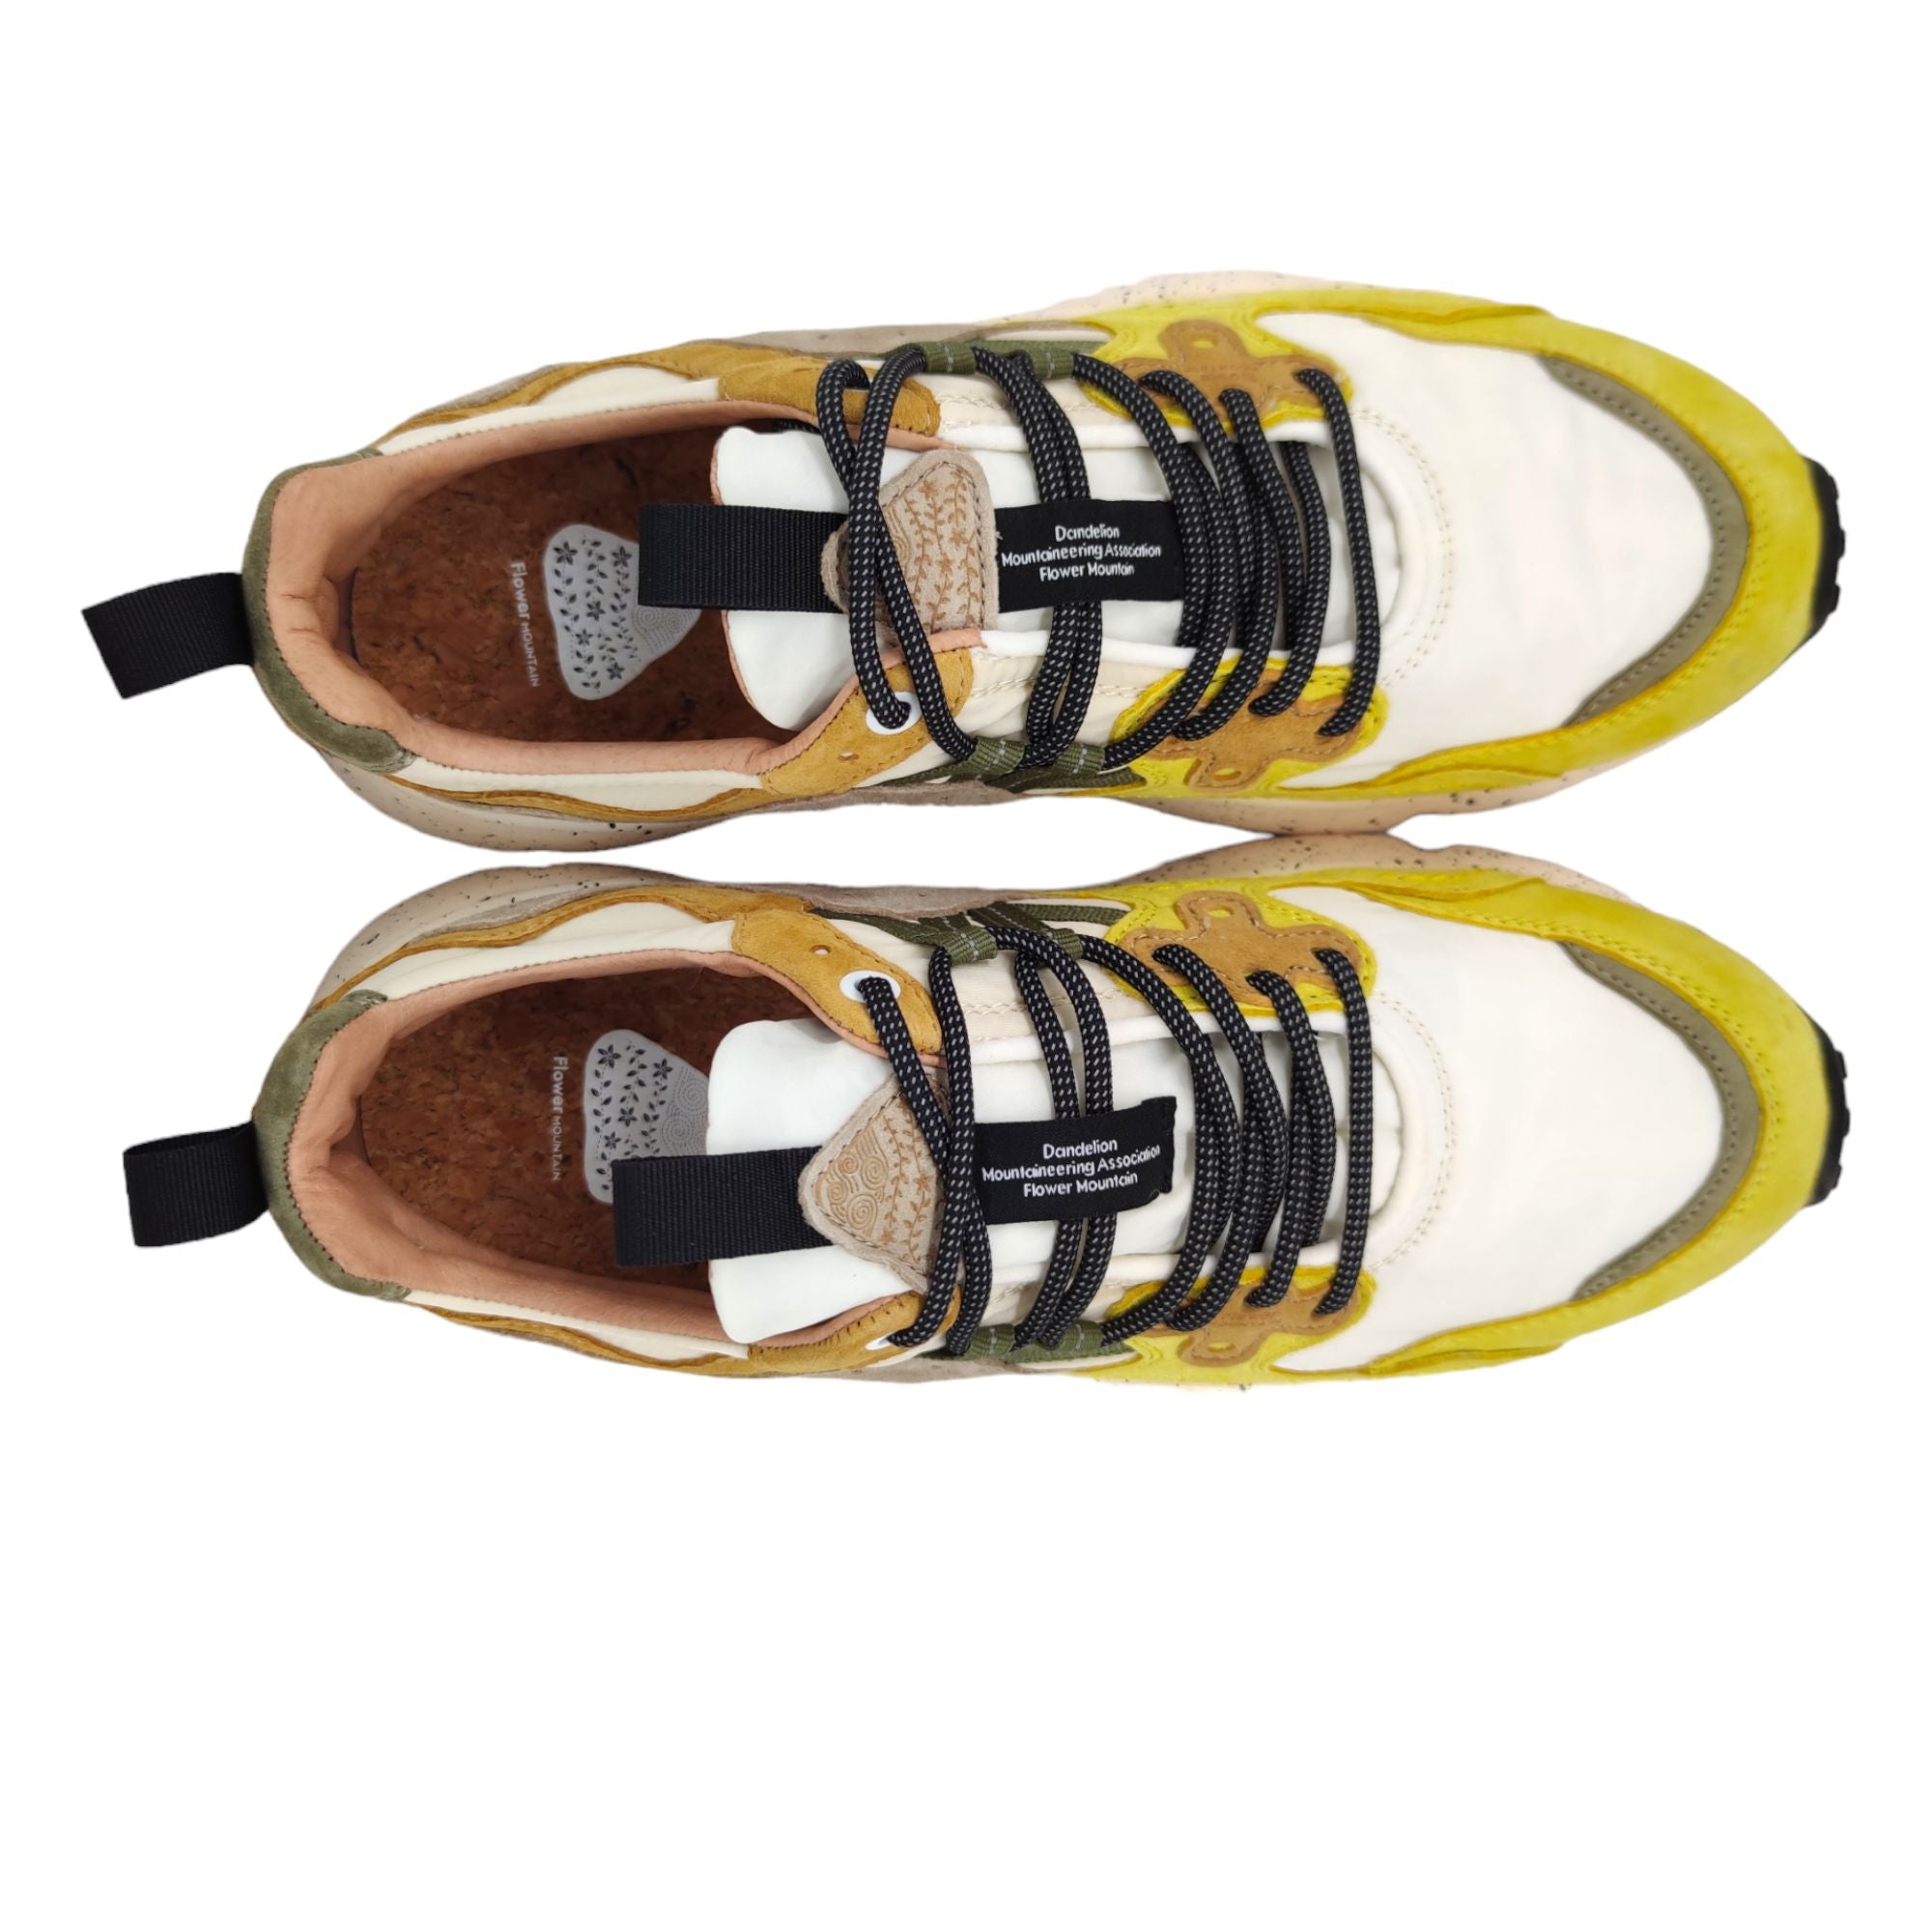 Yamano 3 Shoes Ocher/White/light Brown 